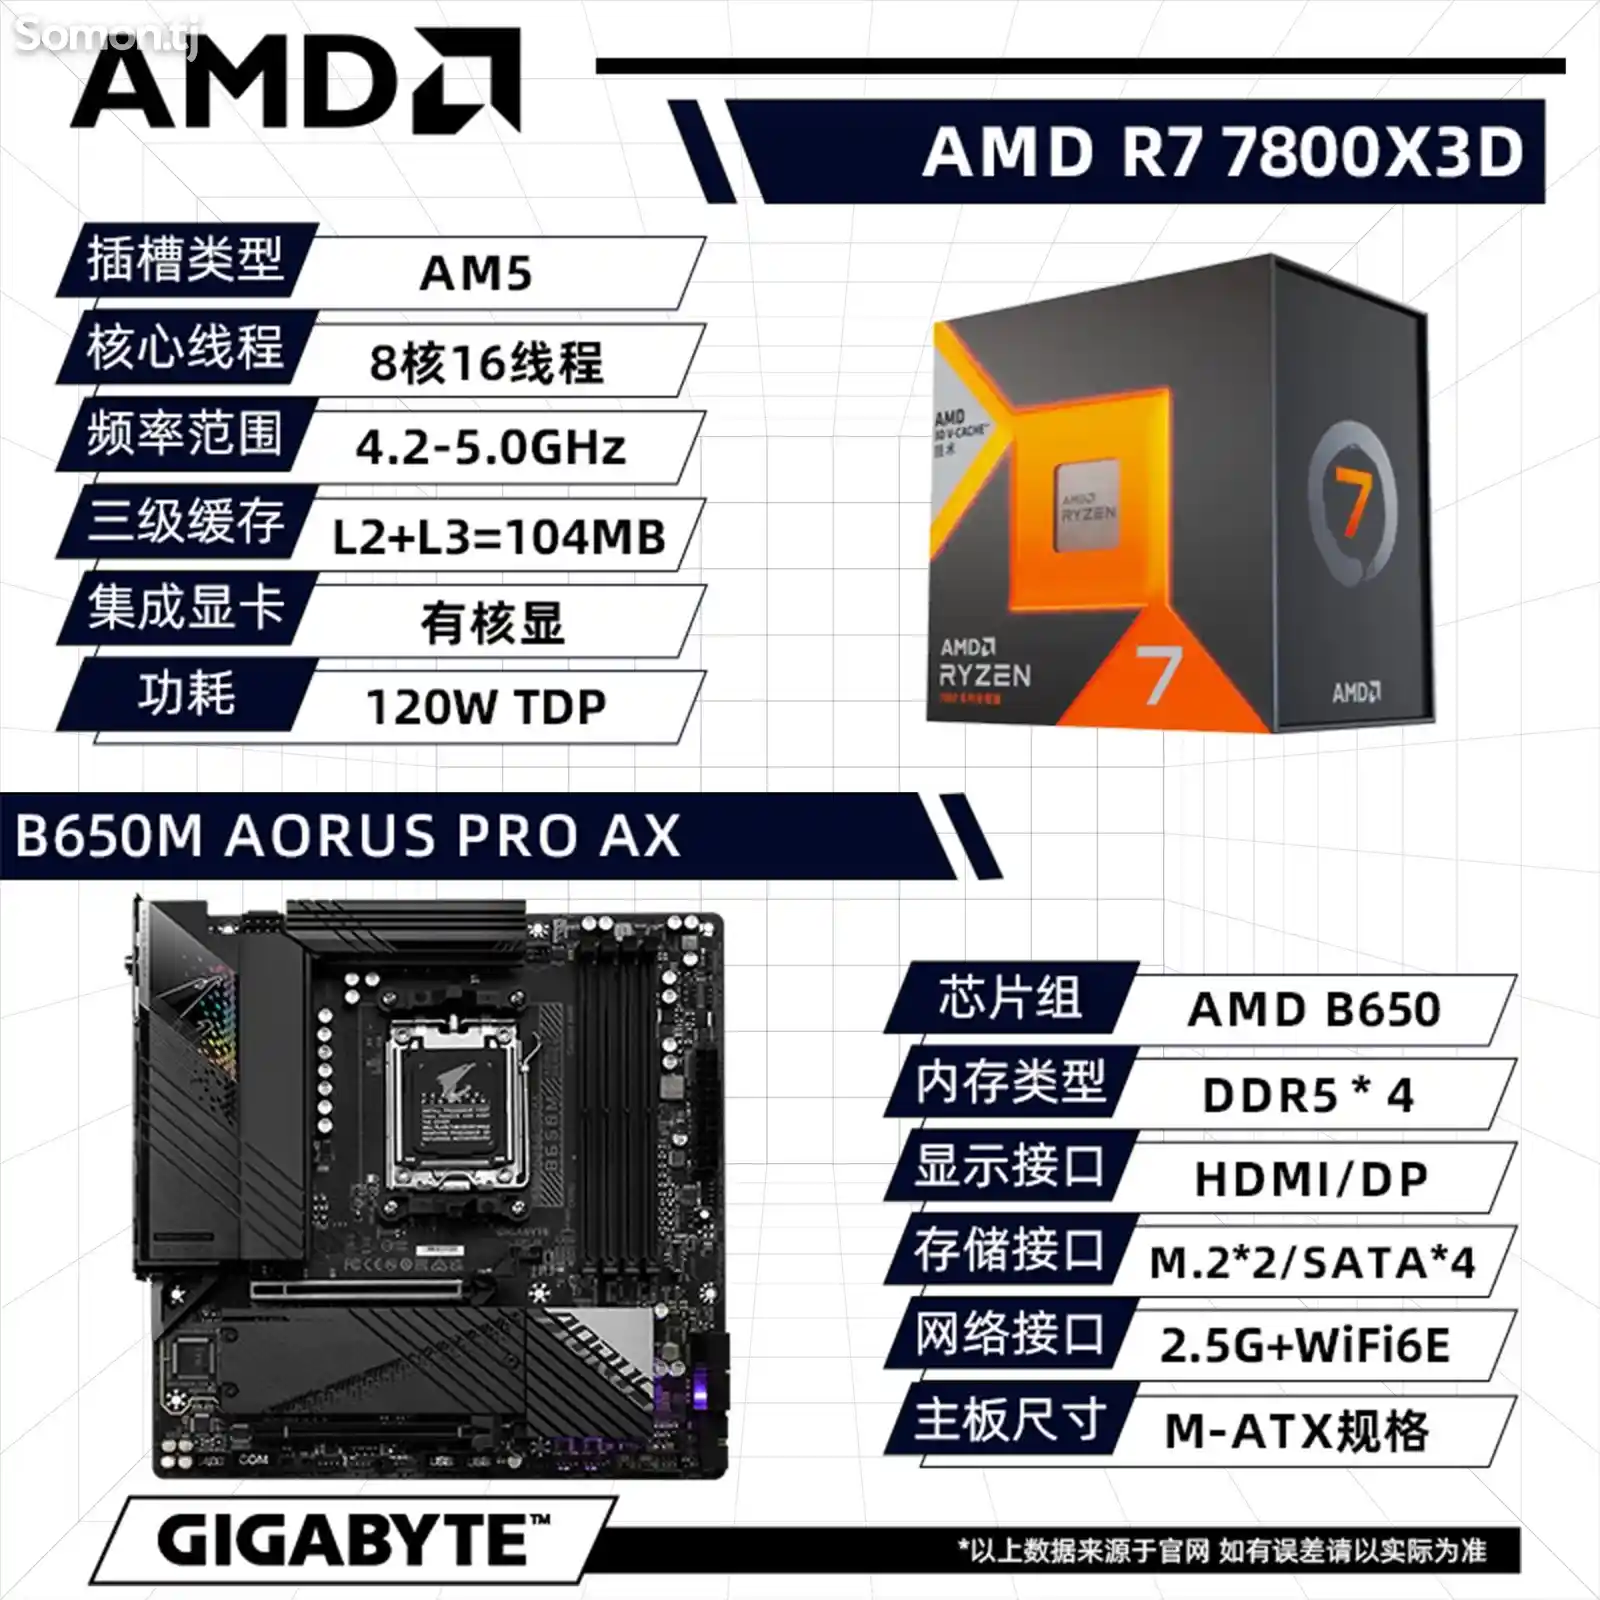 Комплект Gigabyte Aorus pro ax и amd Ryzen 7 7800X3D на заказ-2